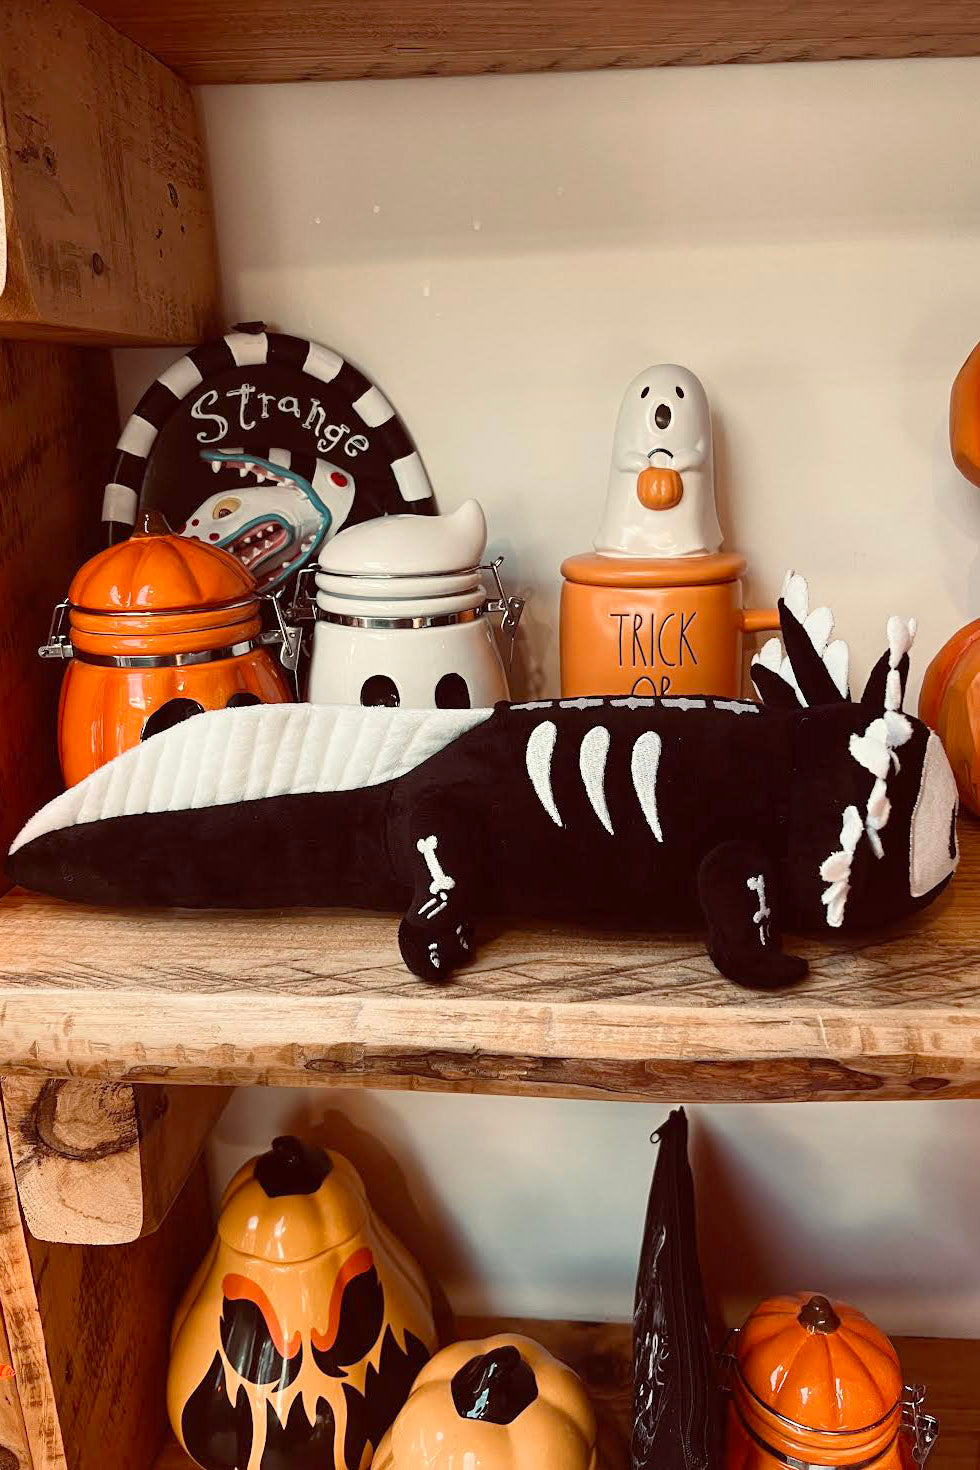 axolotl plushie stuffed animal toy